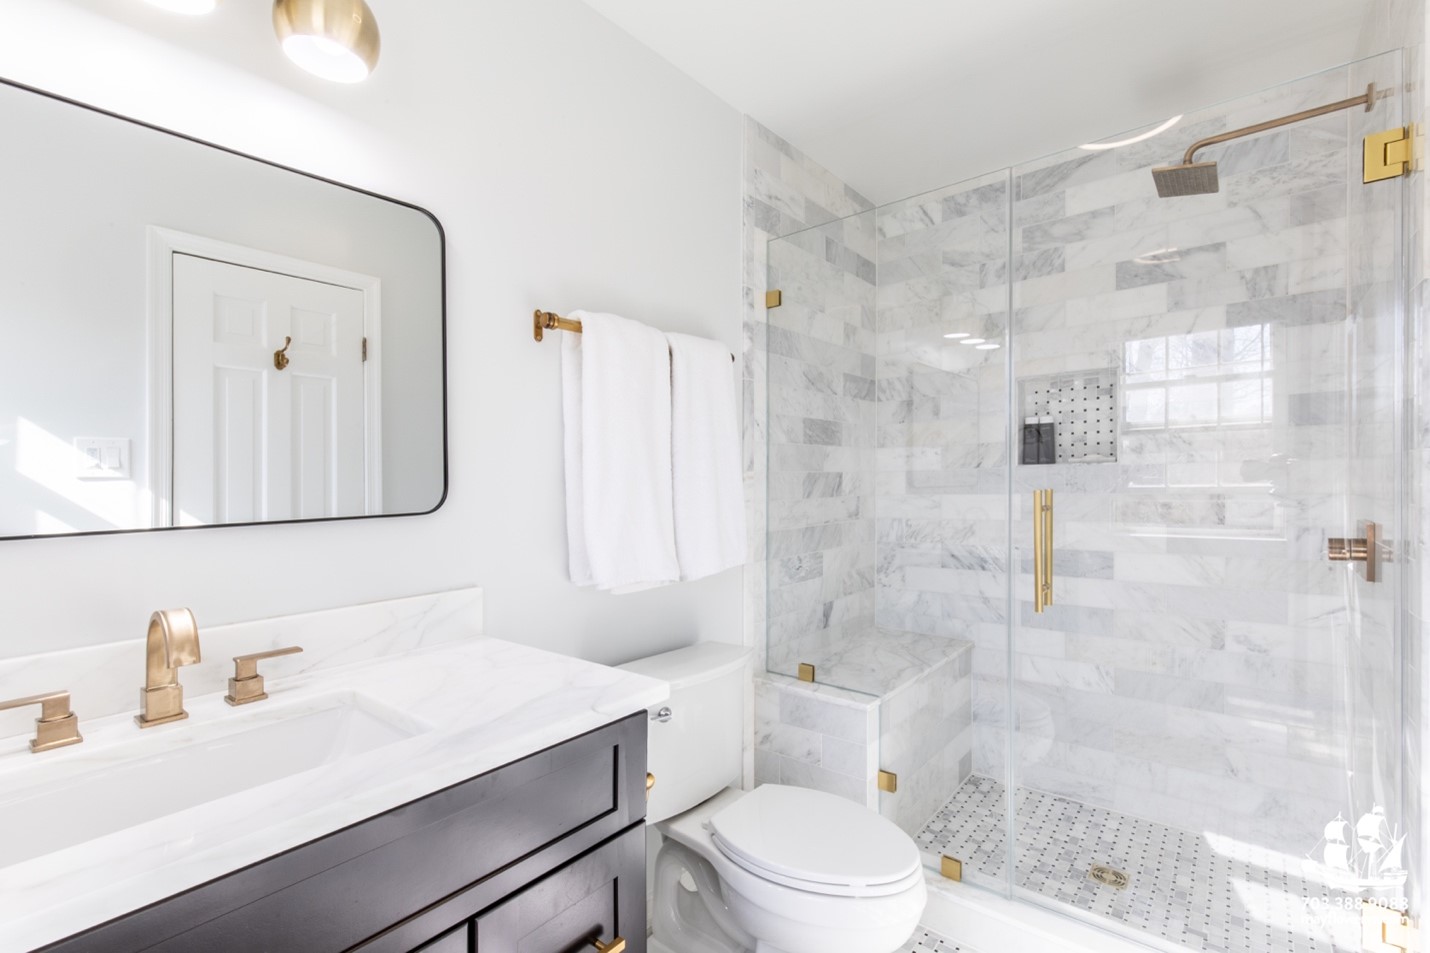 How do you make a small bathroom look luxurious on a budget?